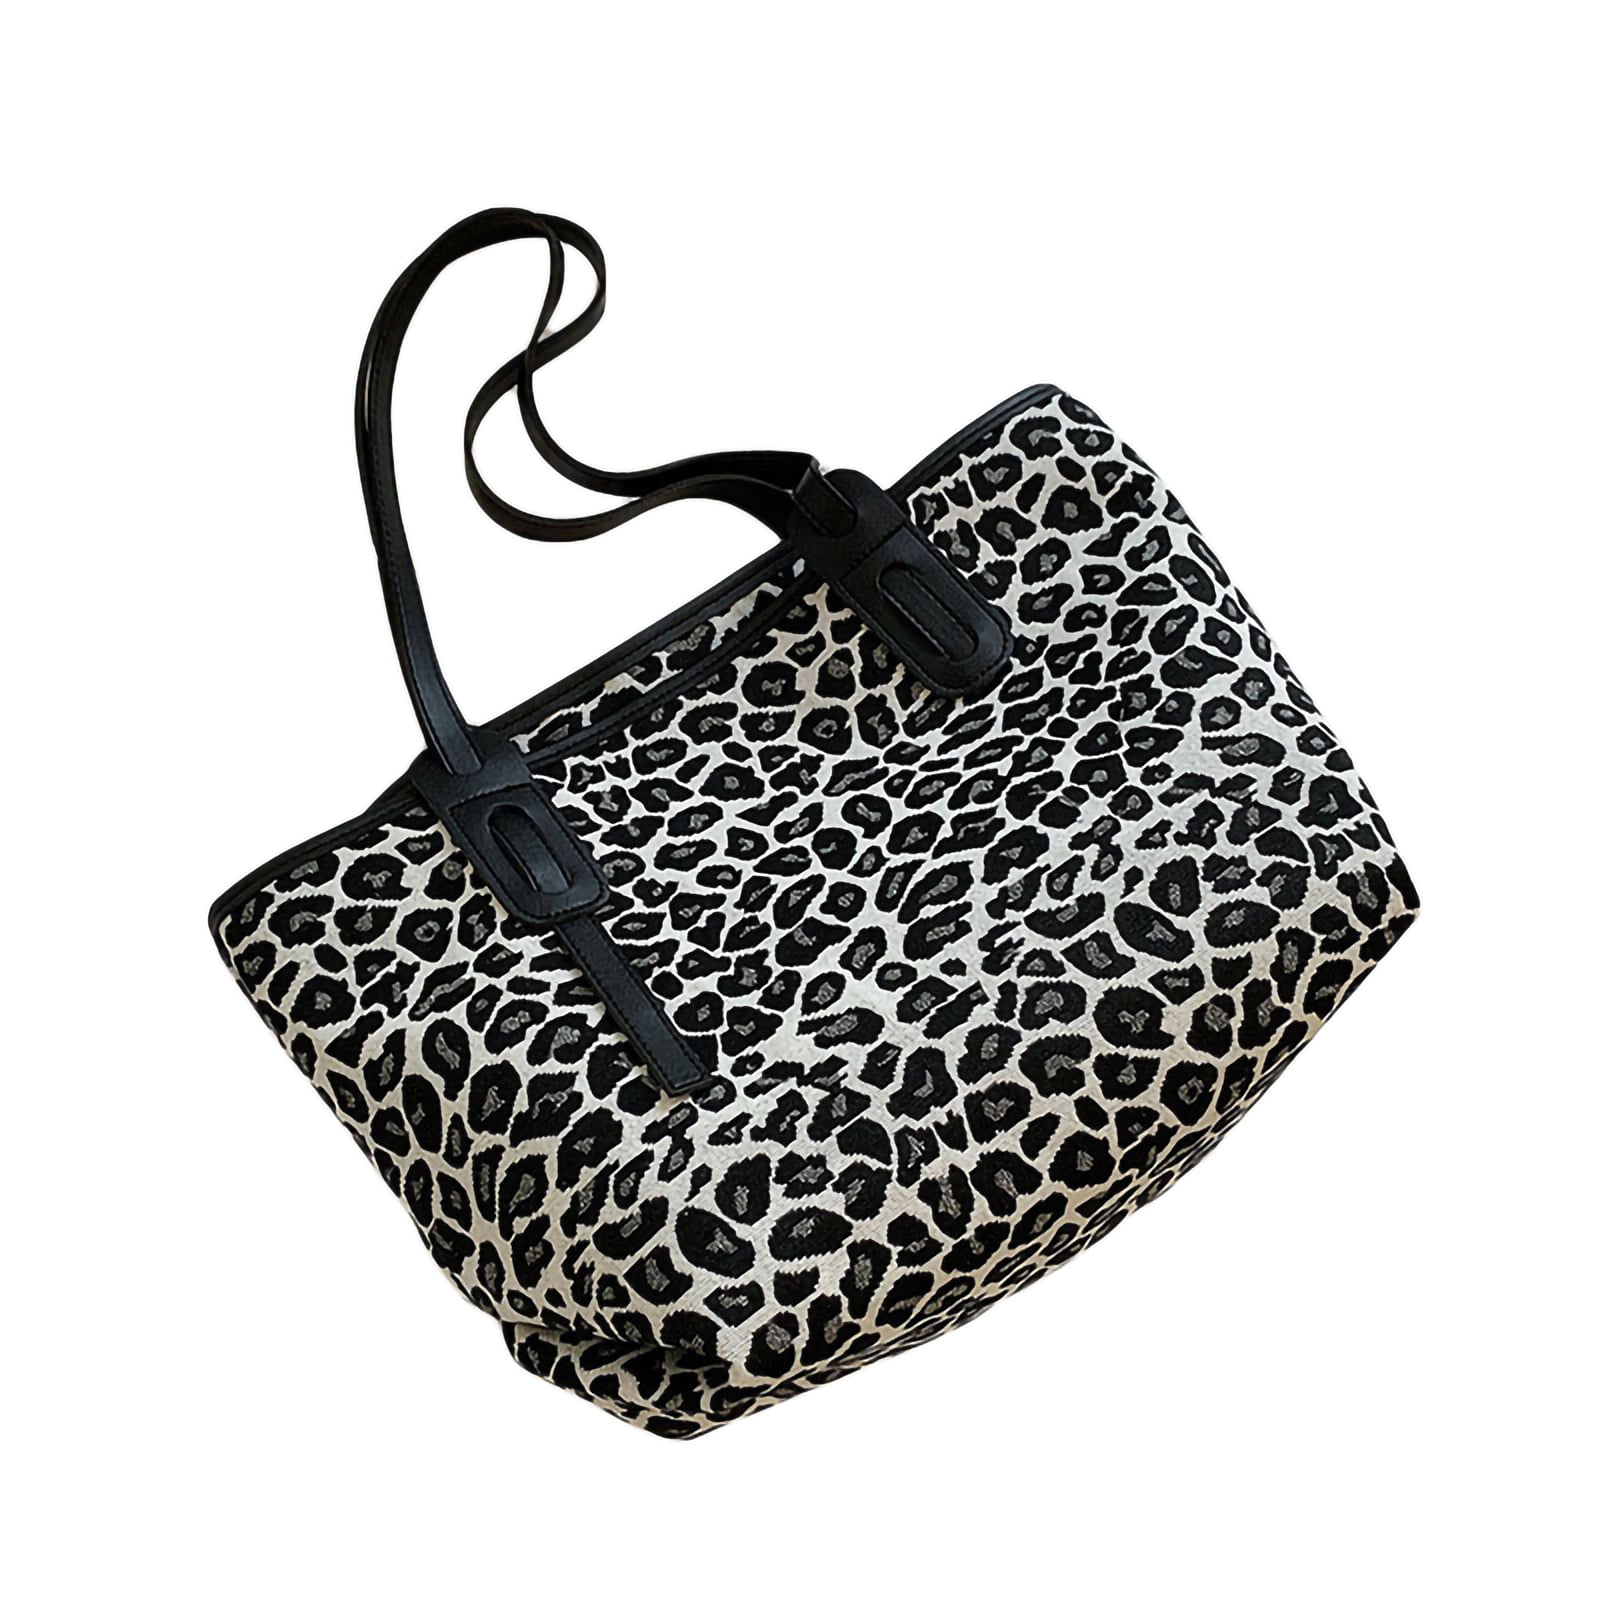 Listenwind Women's Casual Shoulder Bag Leopard Print Soft PU 